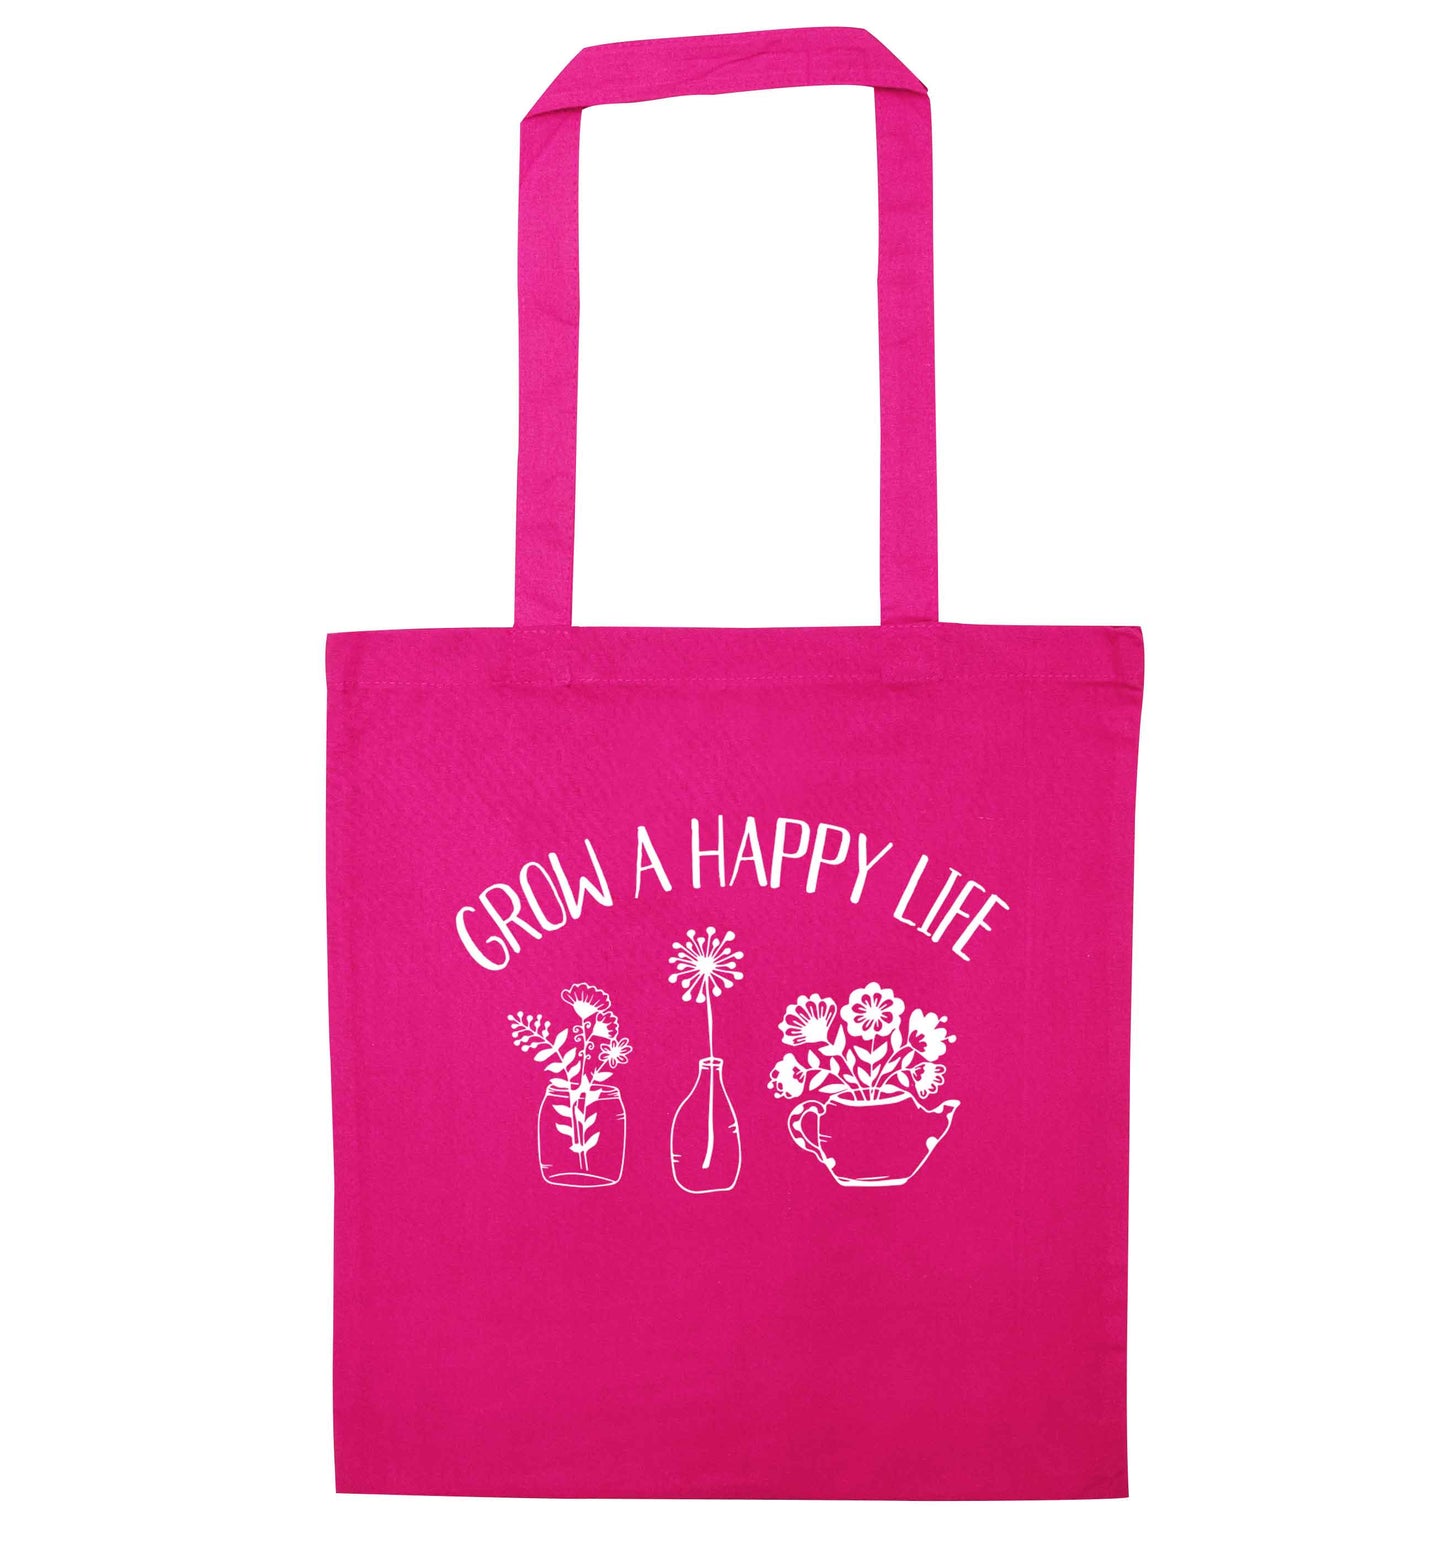 Grow a happy life pink tote bag